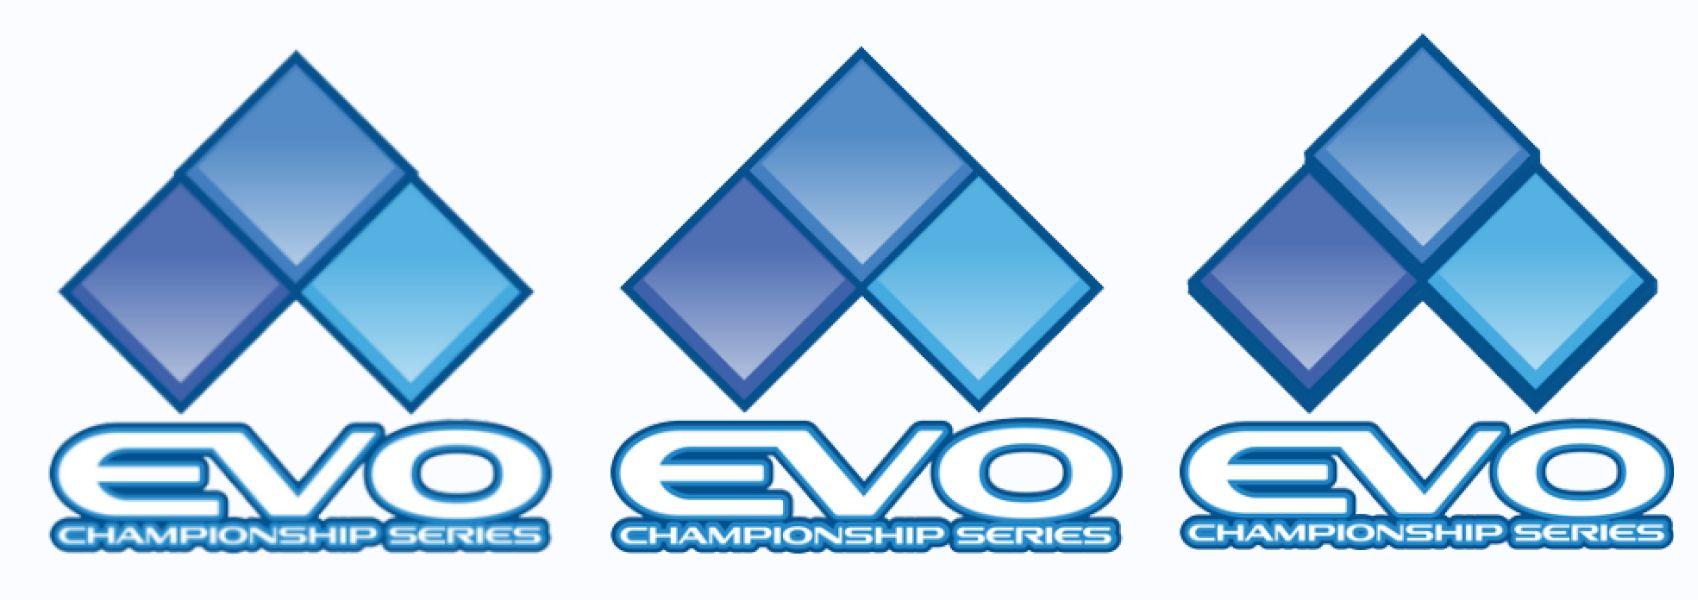 EVO Logo - Anyone slightly irritated with the evo logo? : StreetFighter